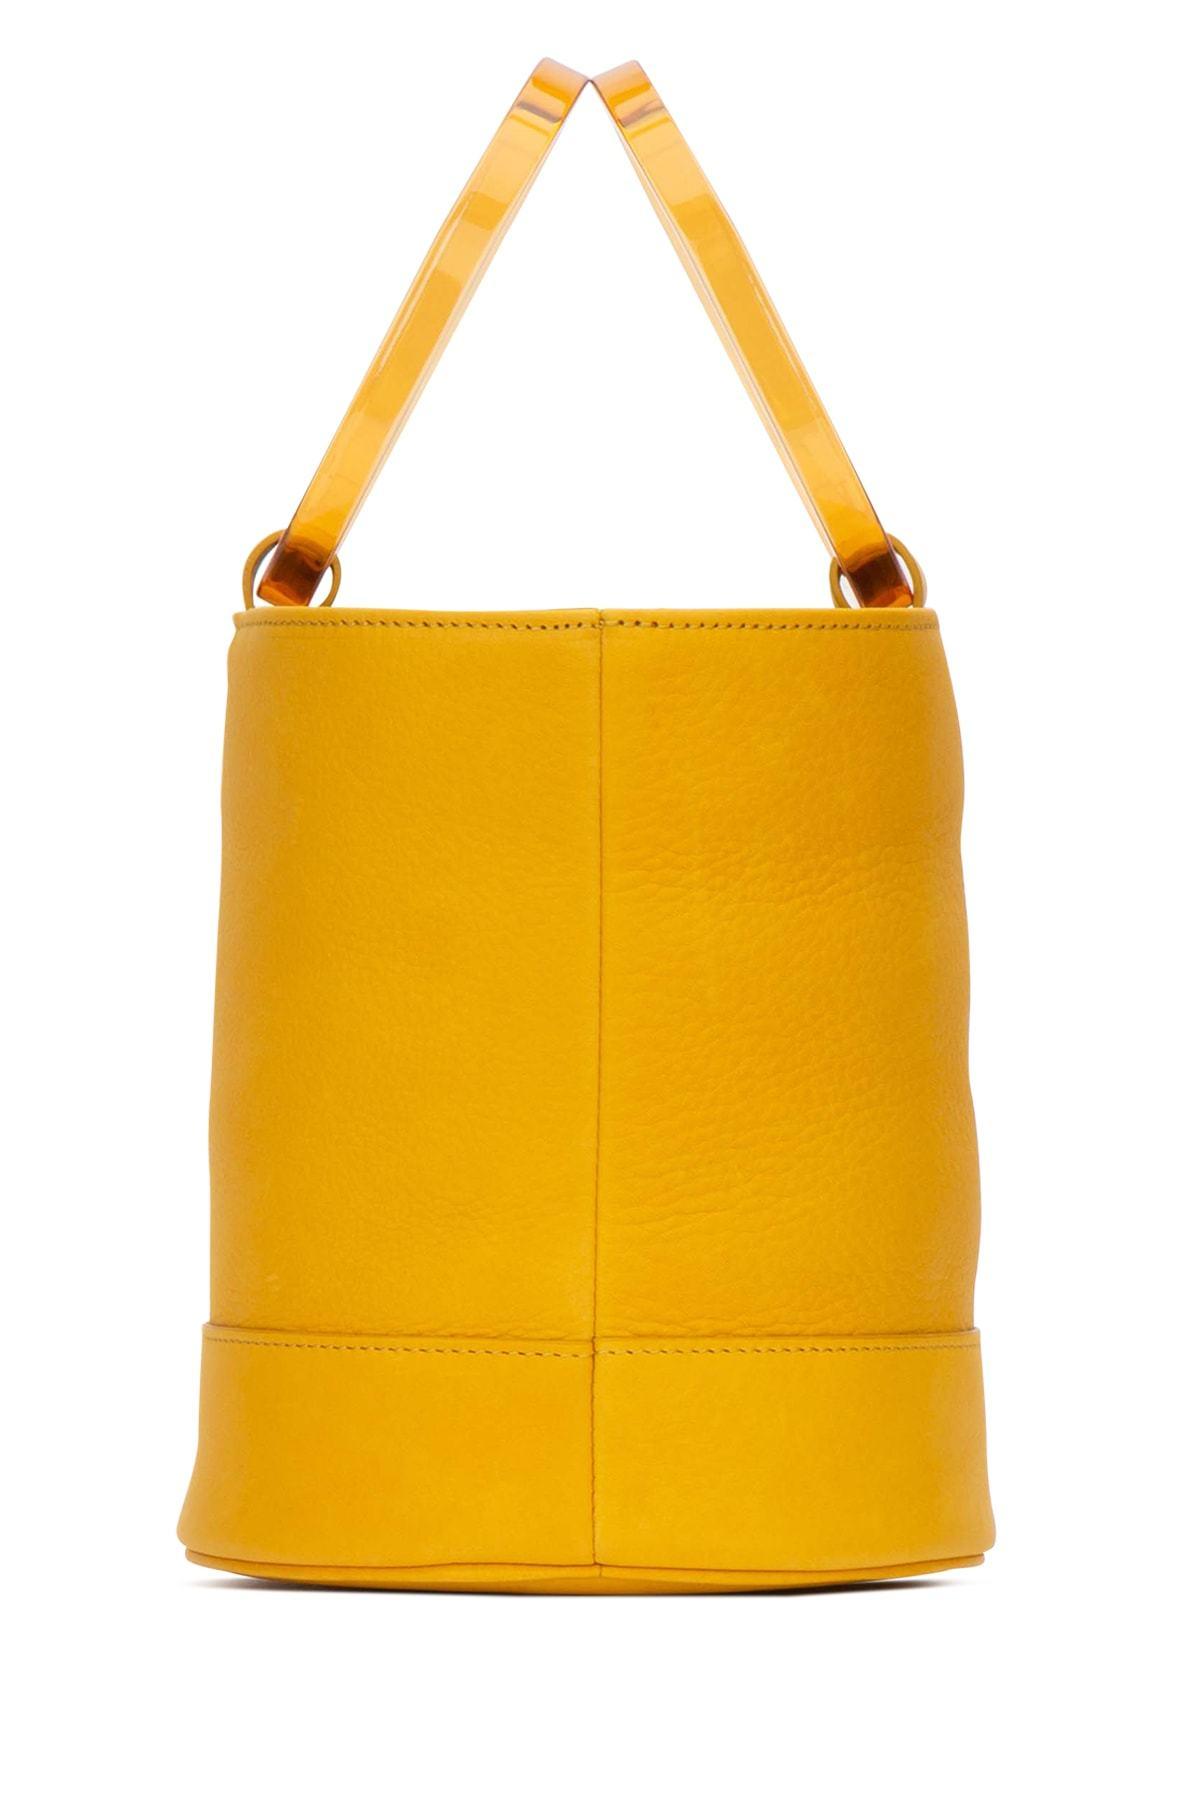 Simon Miller Leather Medium Bonsai Bucket Bag in Yellow - Lyst